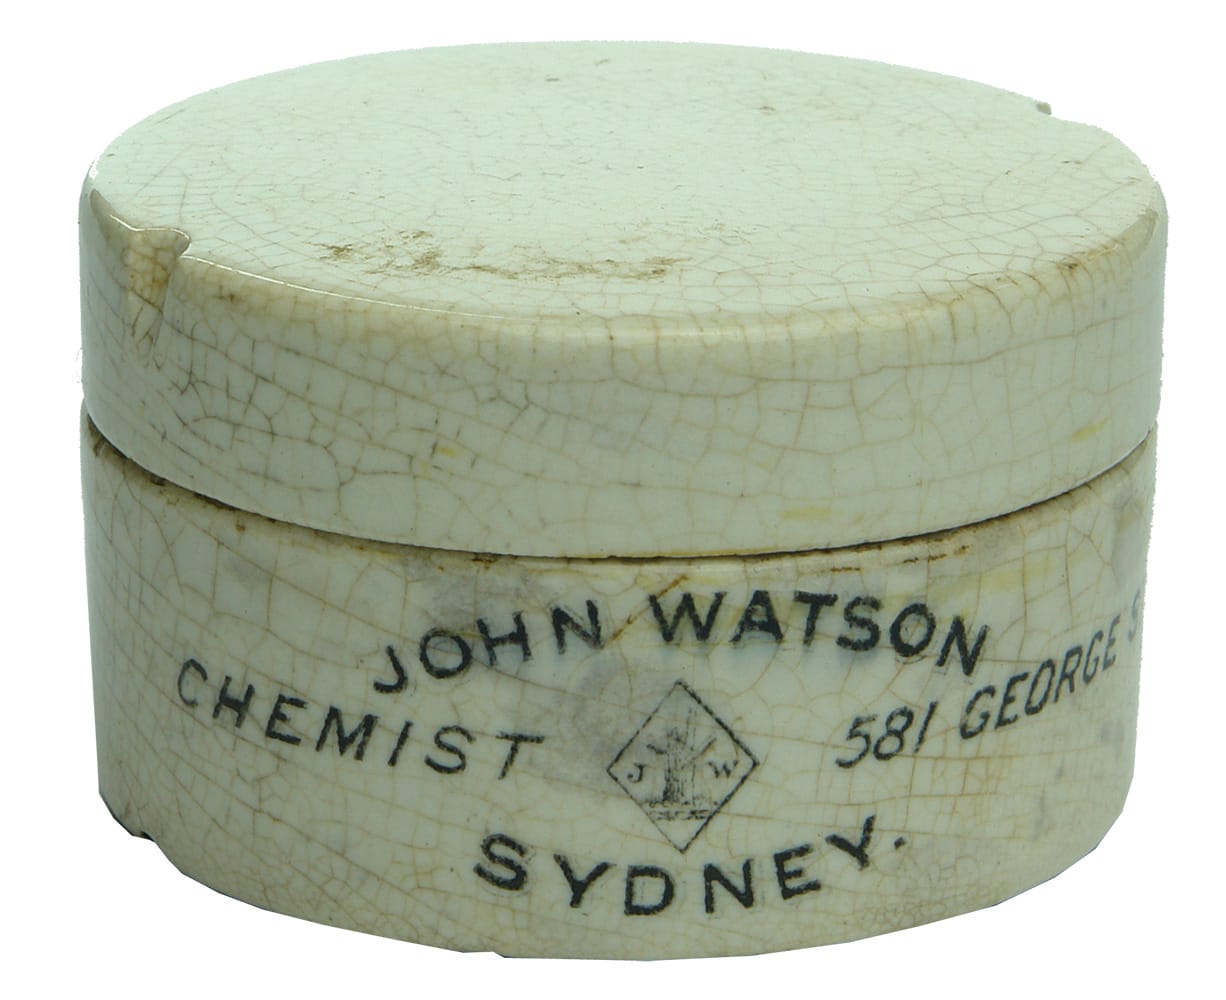 John Watson Chemist Sydney Ceramic Pot